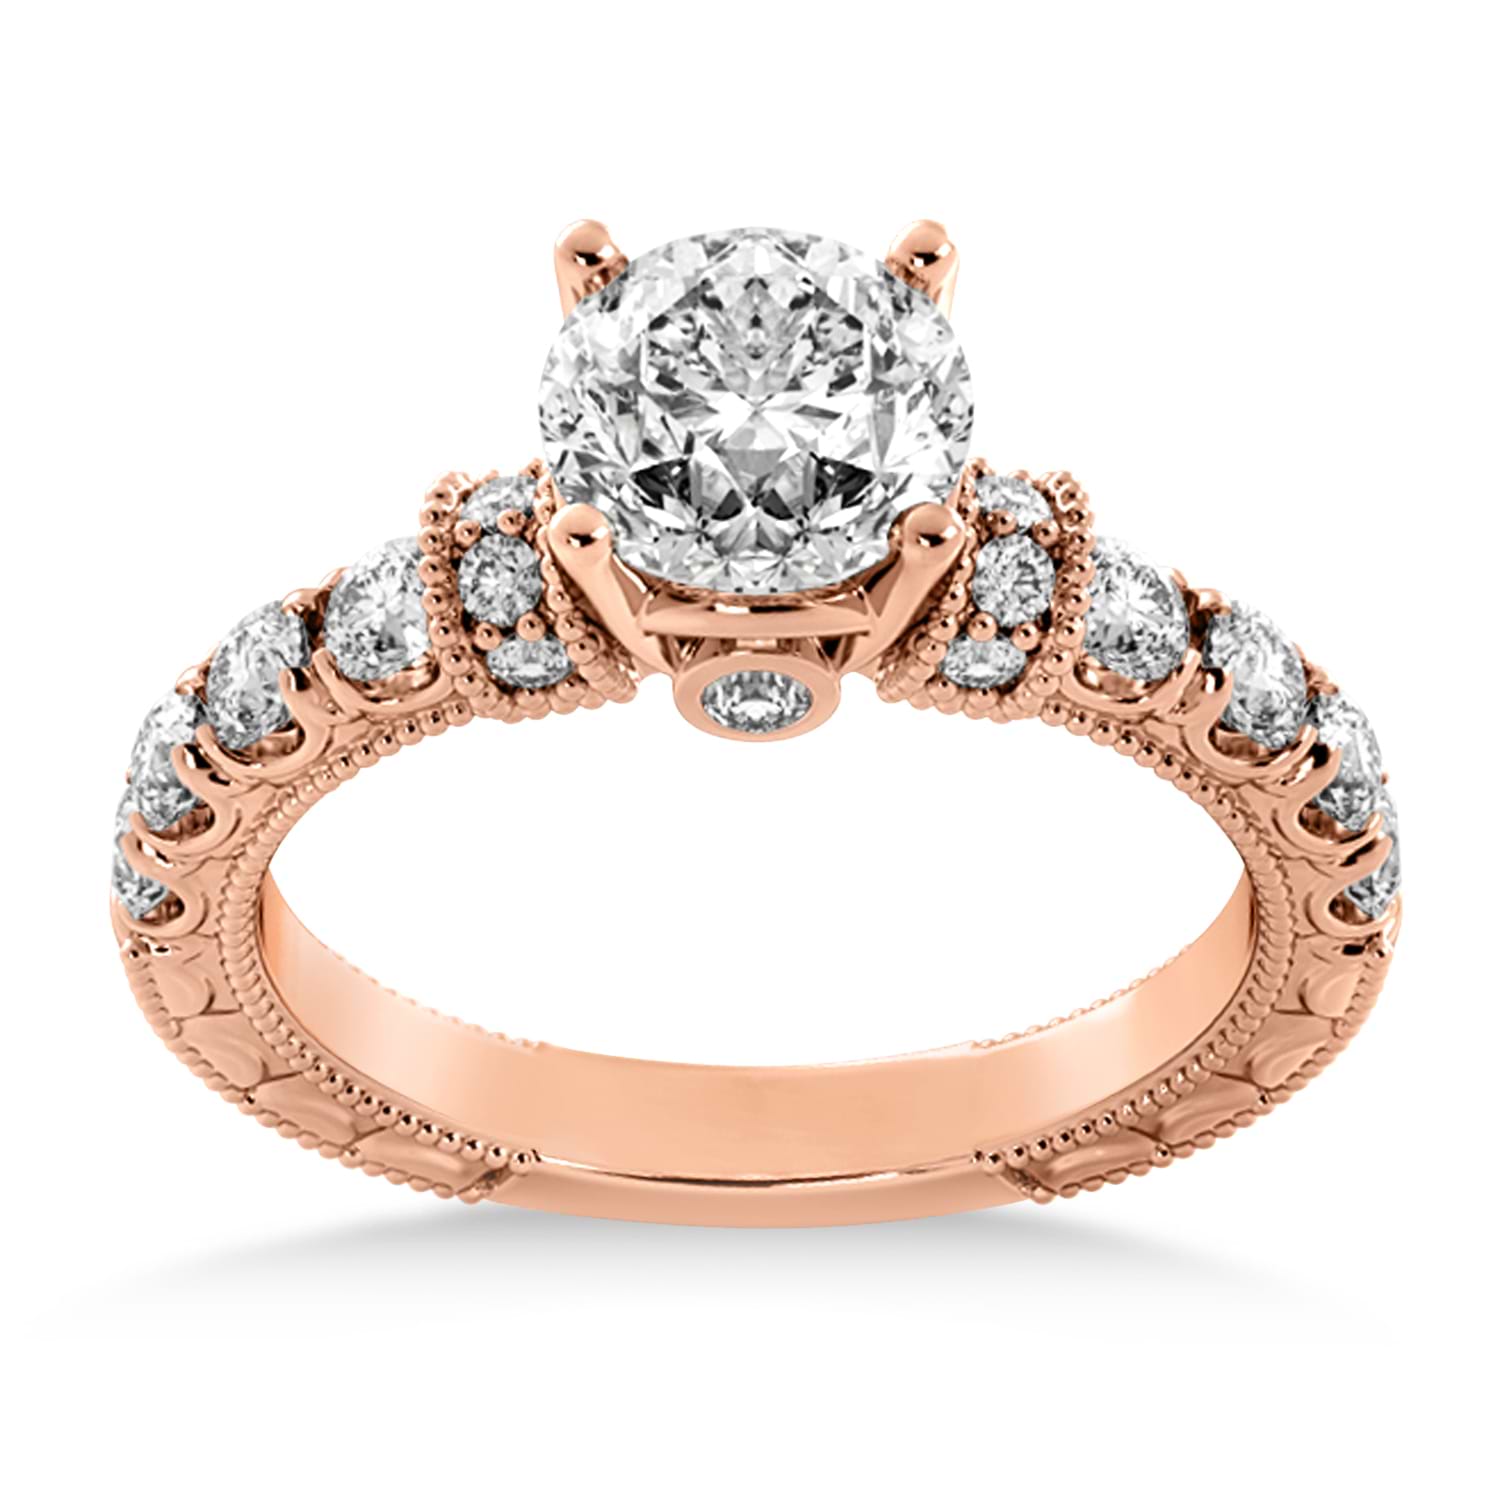 Diamond Vintage Style Engagement Ring 18k Rose Gold (0.52ct)